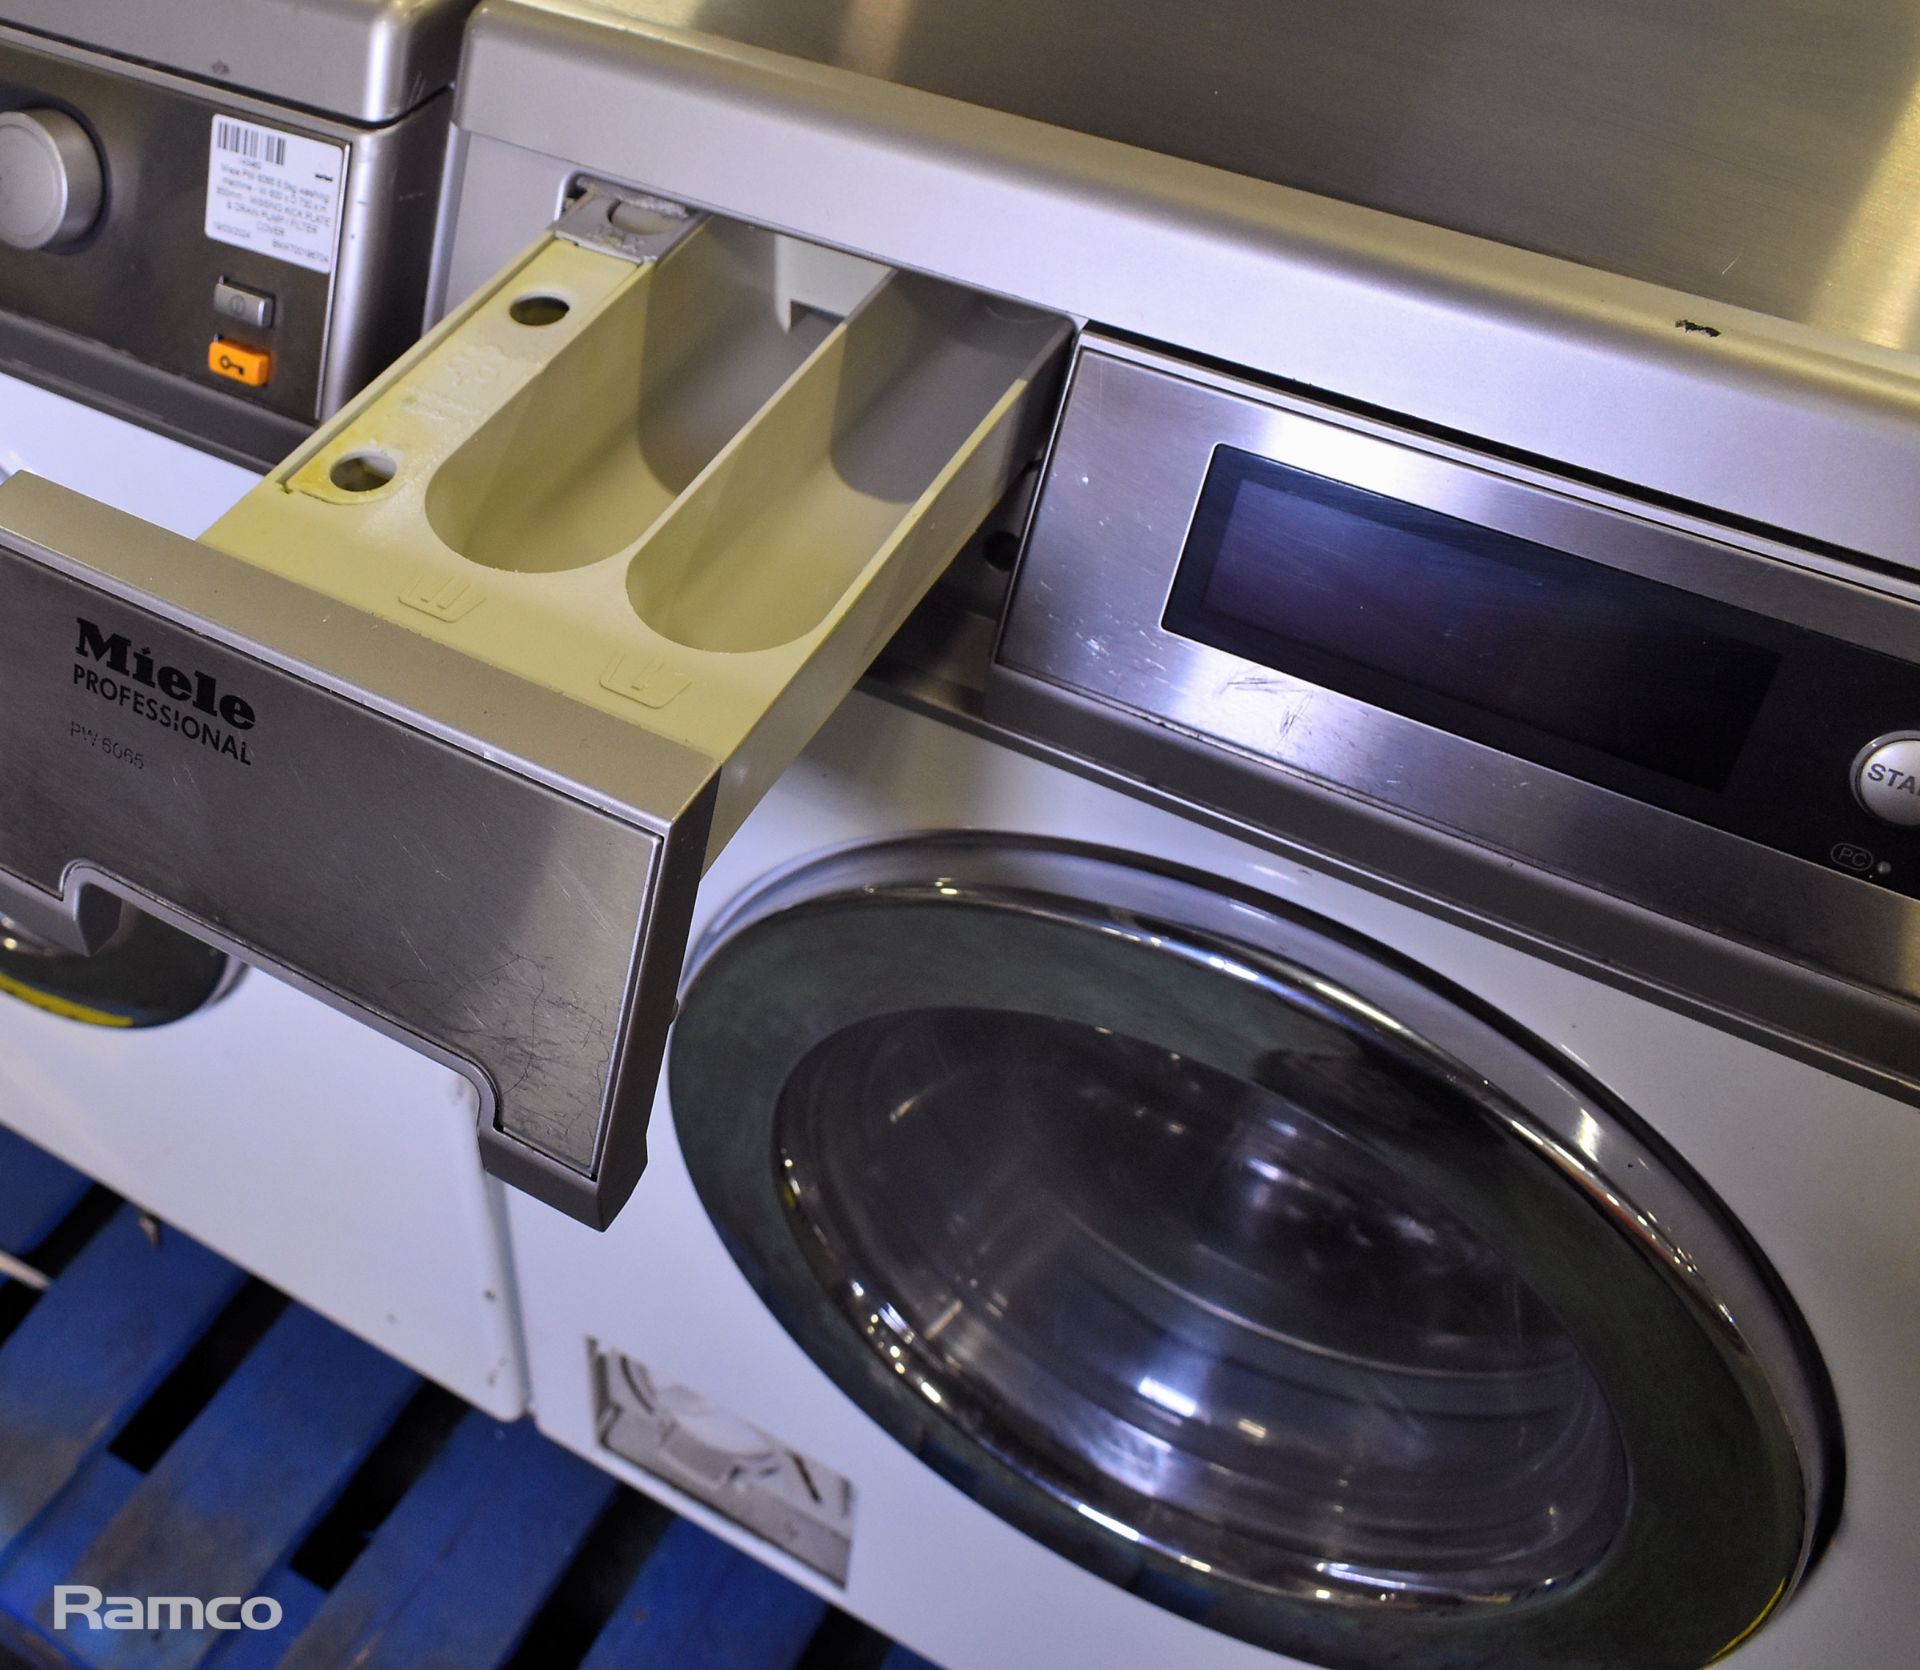 Miele PW 6065 6.5kg washing machine - W 600 x D 730 x H 850mm - MISSING KICK PLATE, DRAIN PUMP - Image 5 of 5